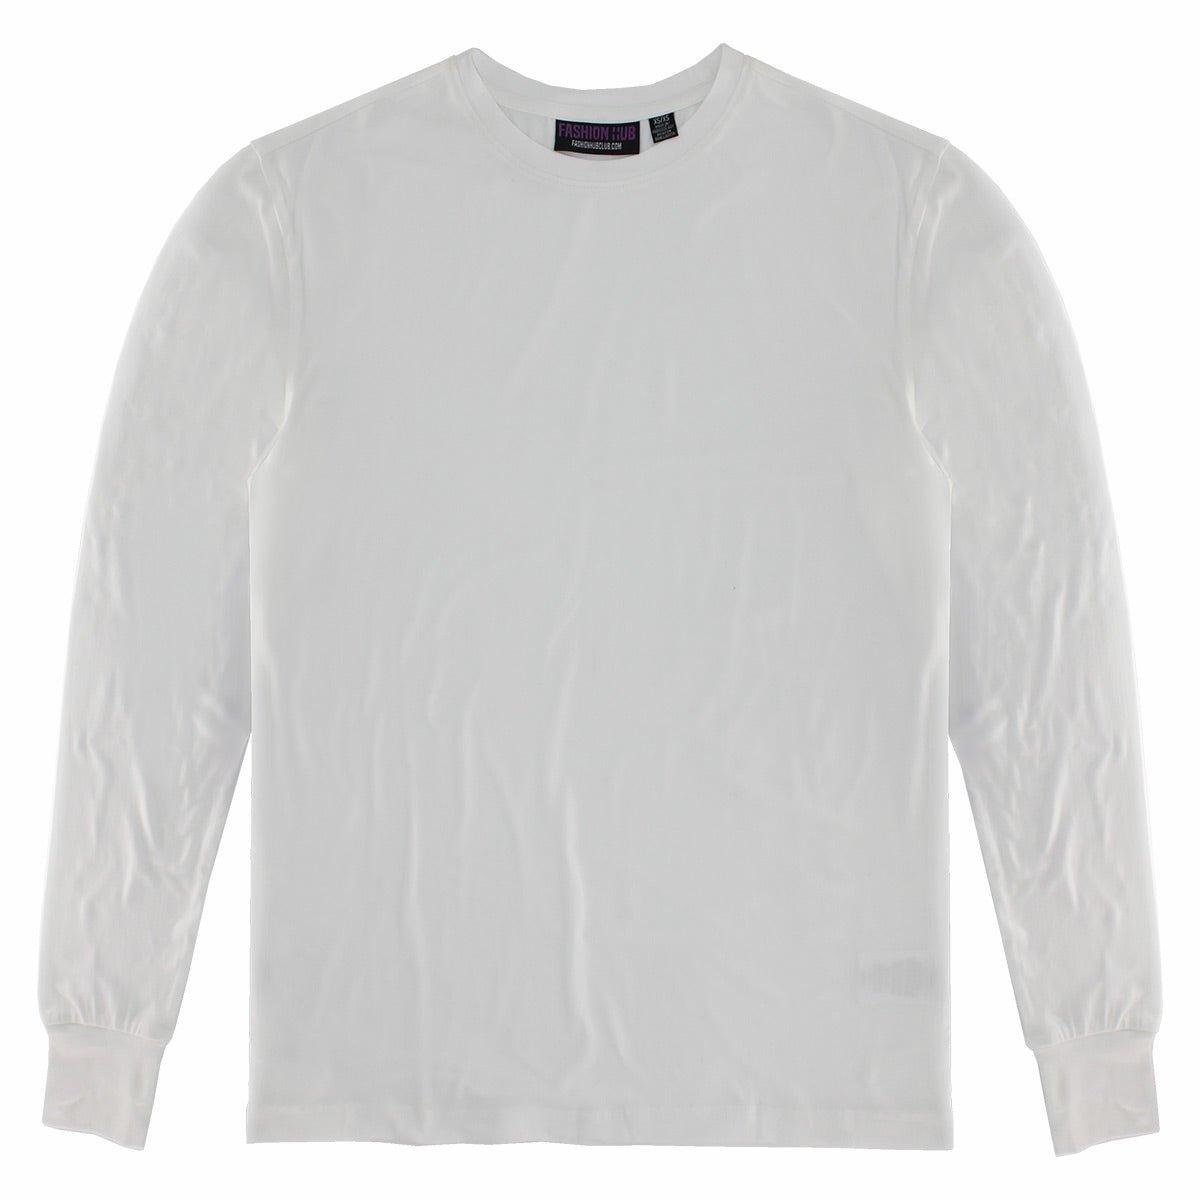 White Grey Better Basics Ultra-Soft Crewneck Long Sleeve T-Shirt by Fashion Hub - Fashion Hub Club